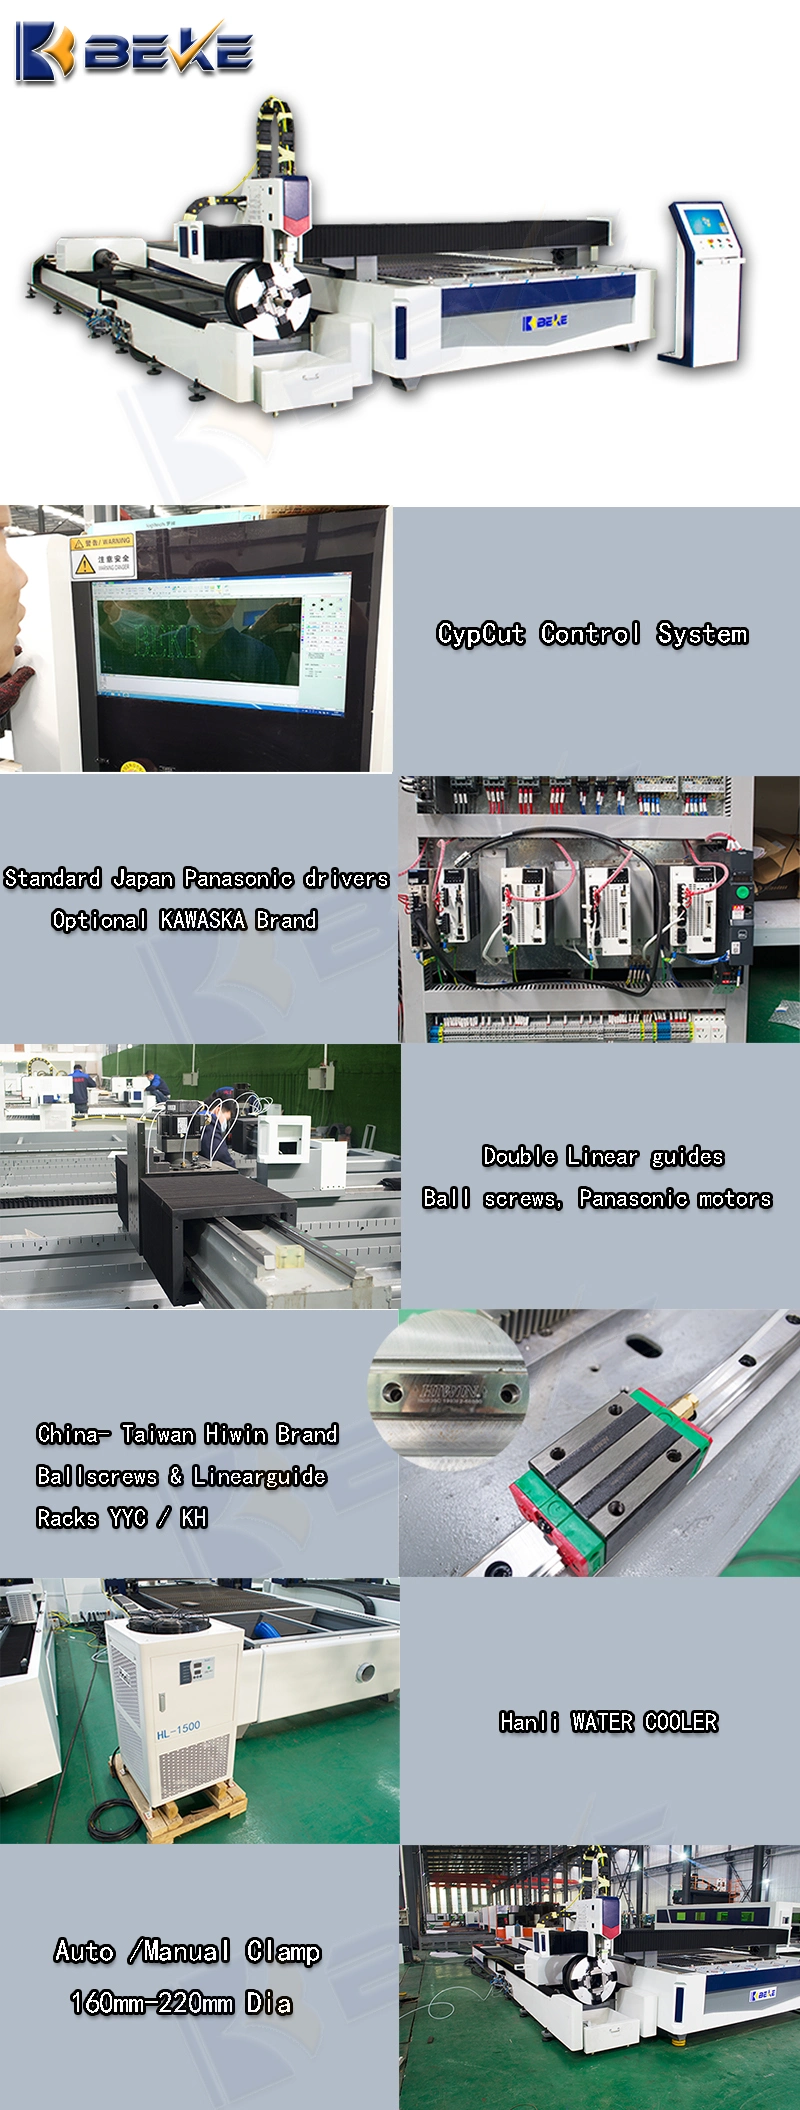 Beke Tube Plate CNC Fiber Laser Cutting Machine / Tube Plate Fiber Laser Cutter